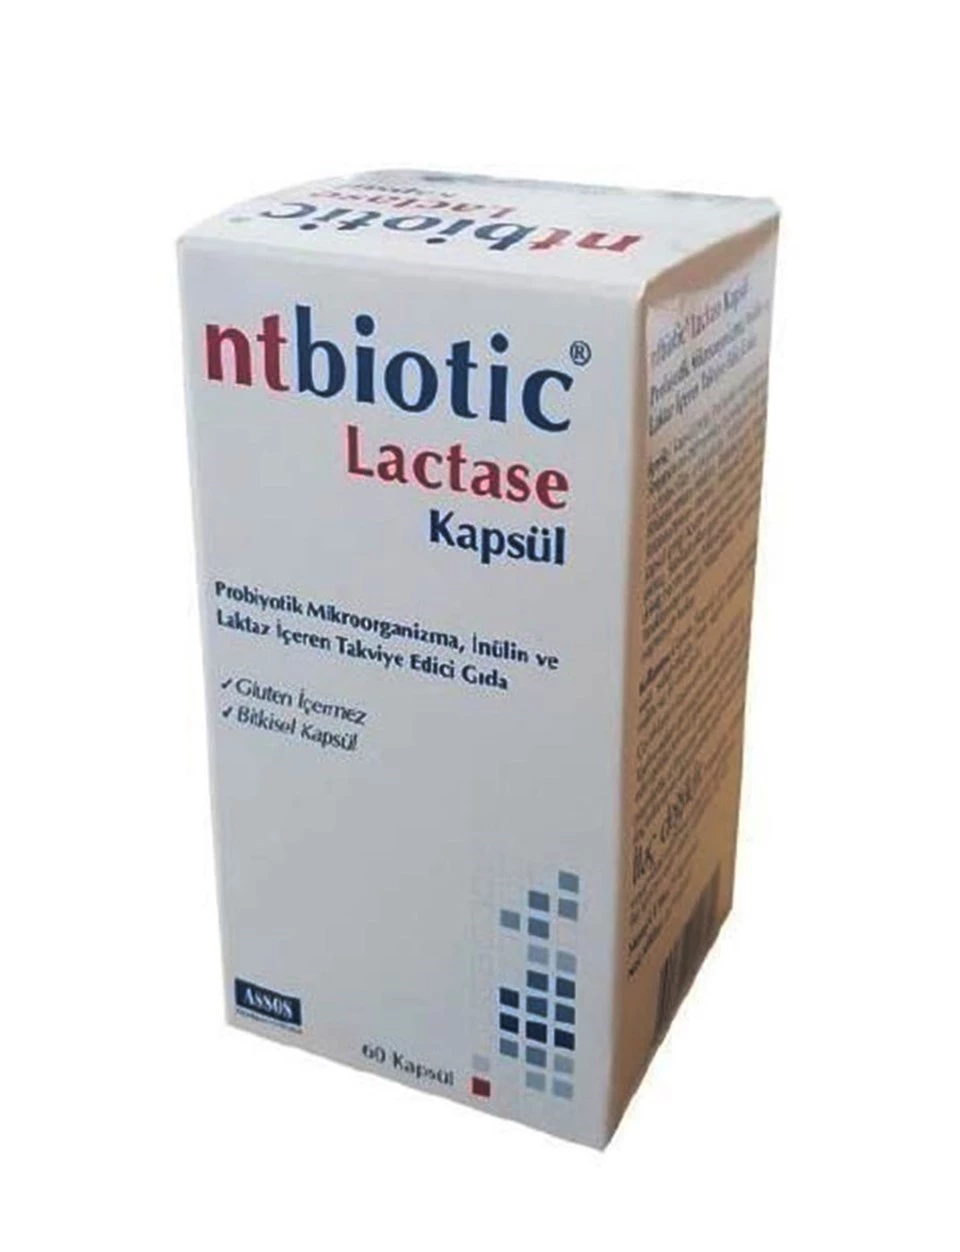 NtBiotic Lactase 60 Kapsul